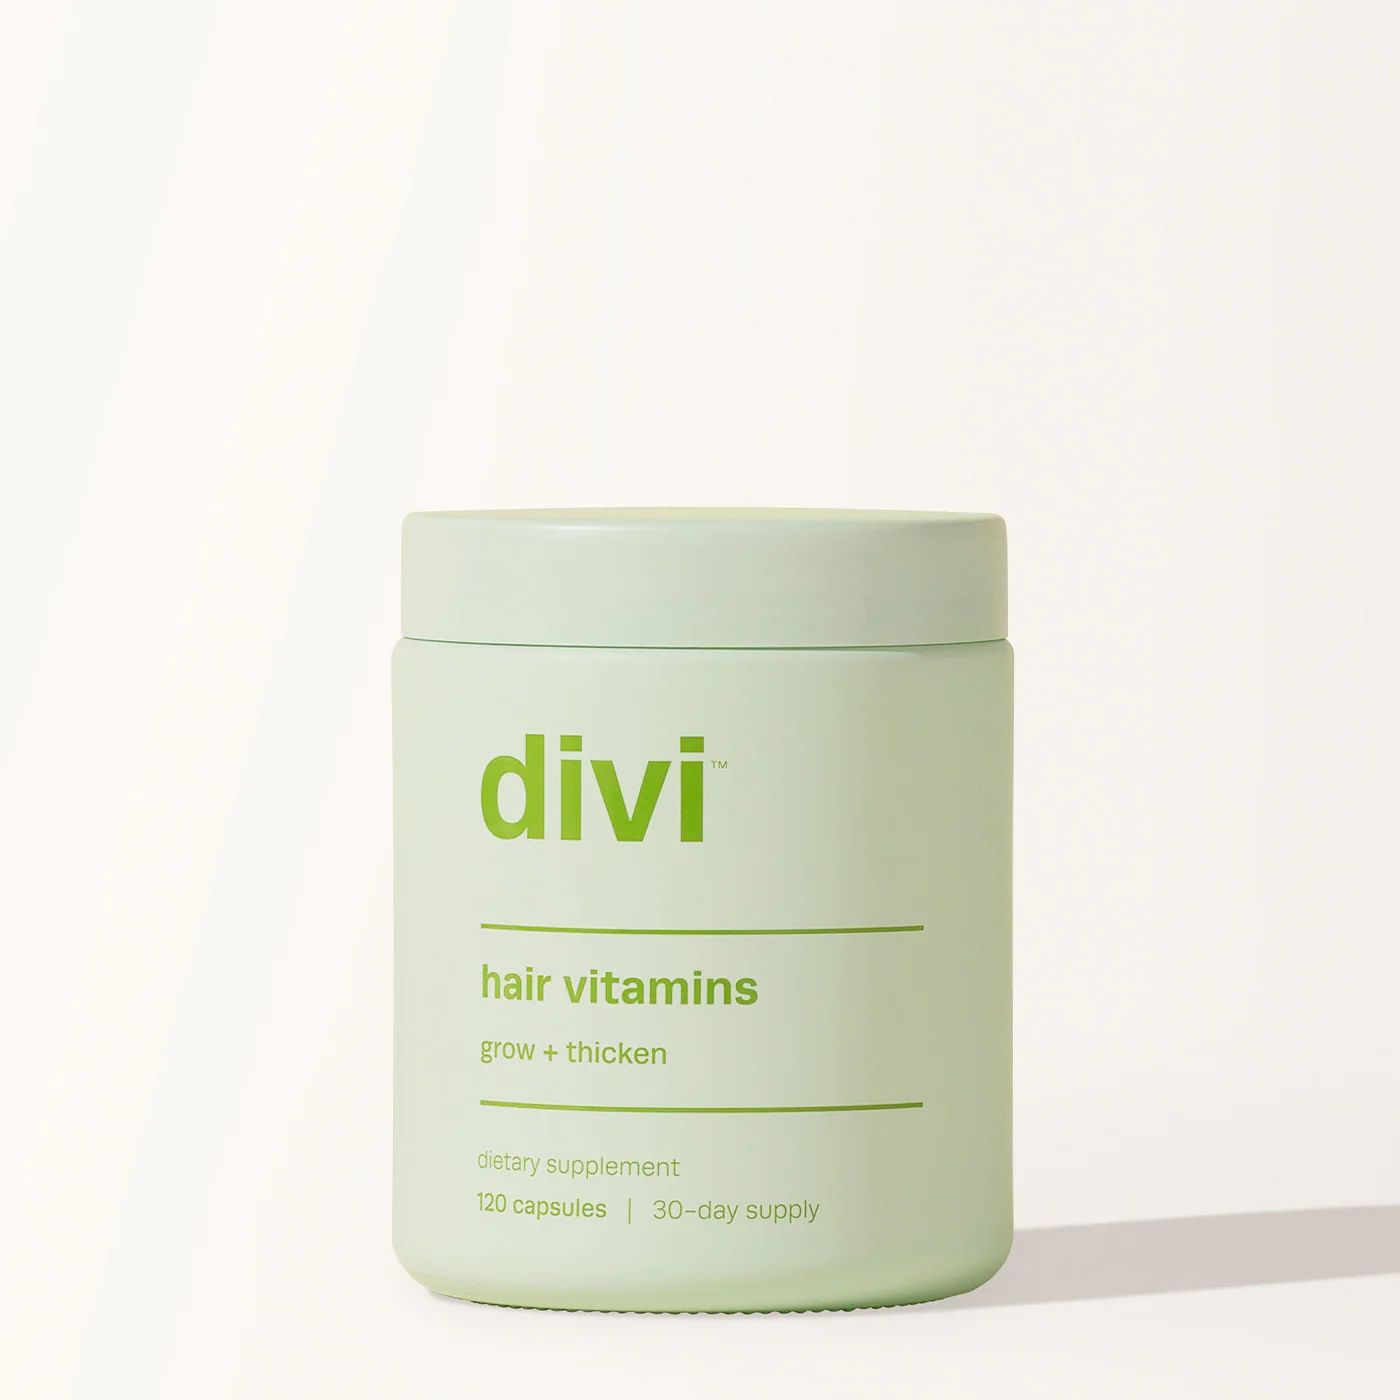 Divi Hair Vitamins | Hair Supplement Formulated For Thicker, Fuller Hair | Divi Official